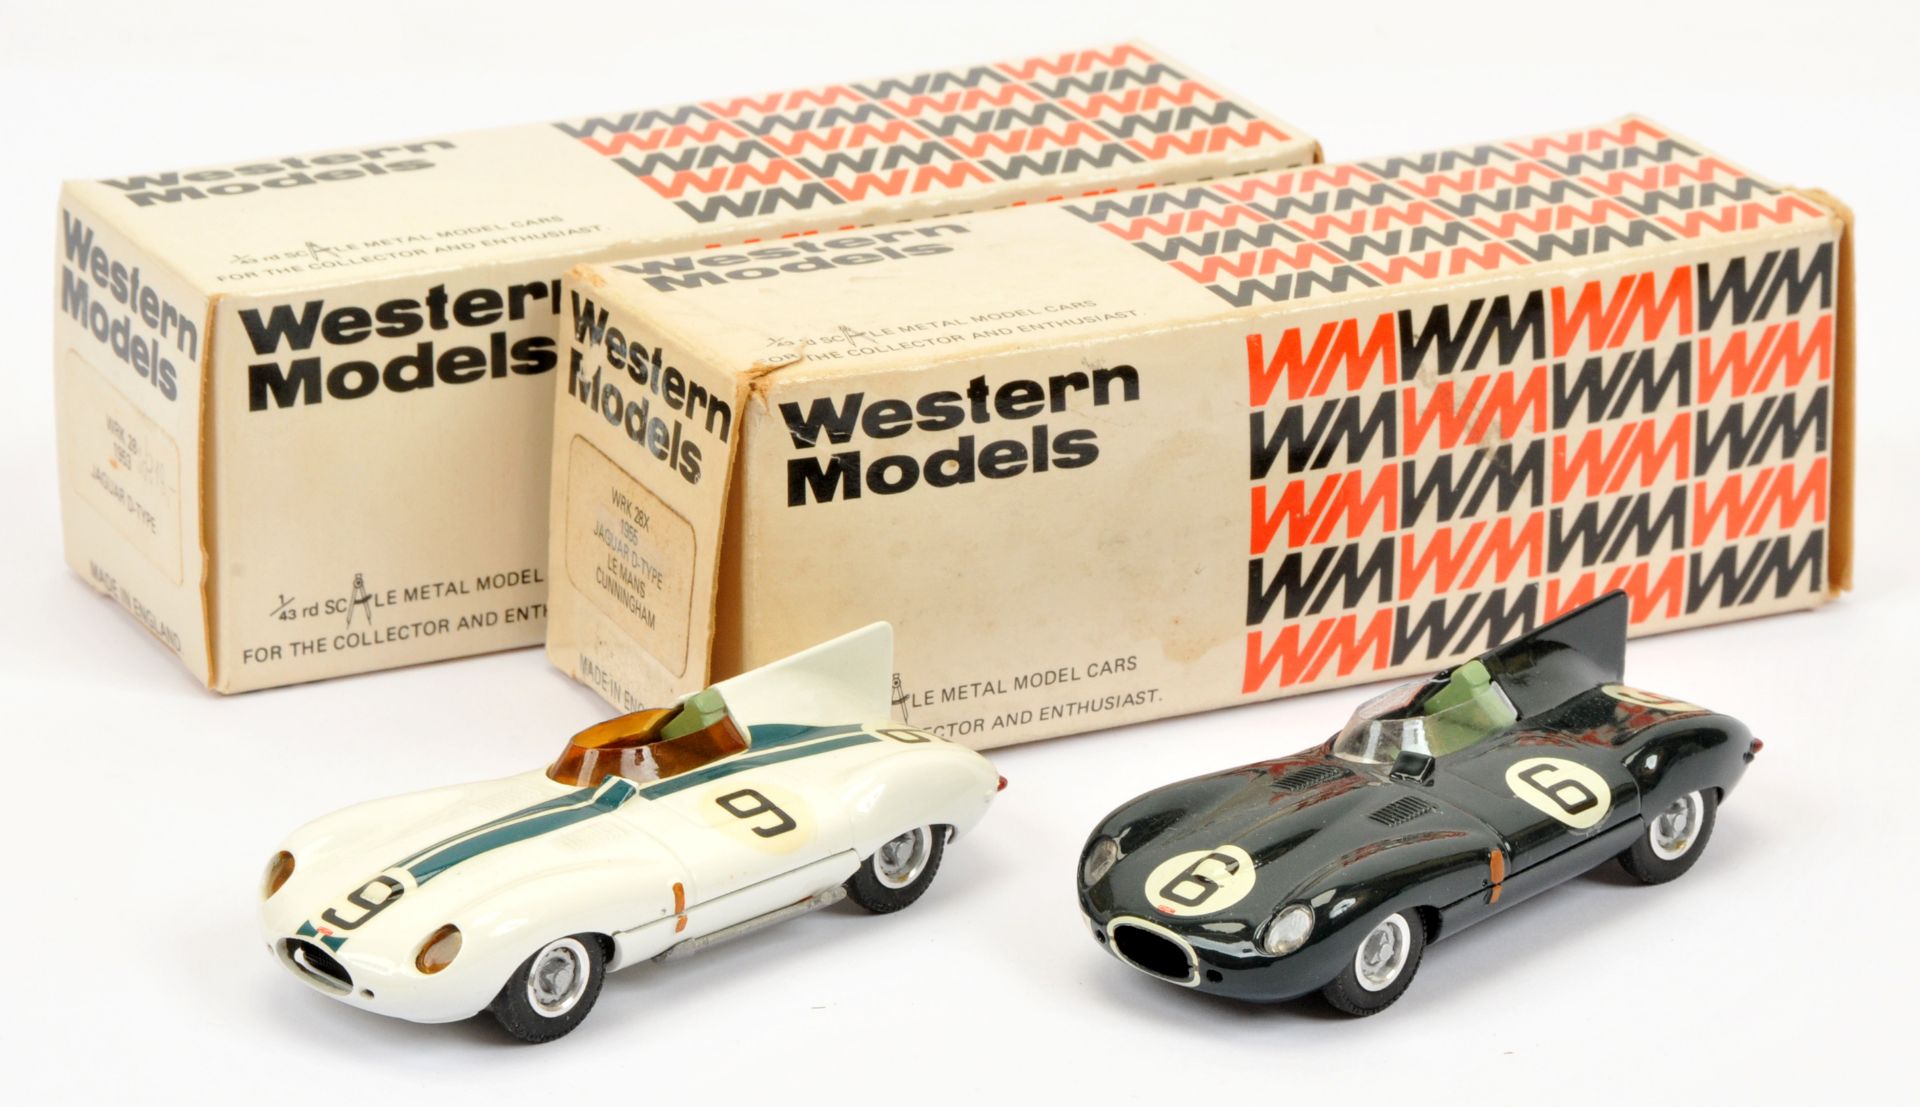 Western Models pair of racing cars - including WRK28 1953 Jaguar D-type